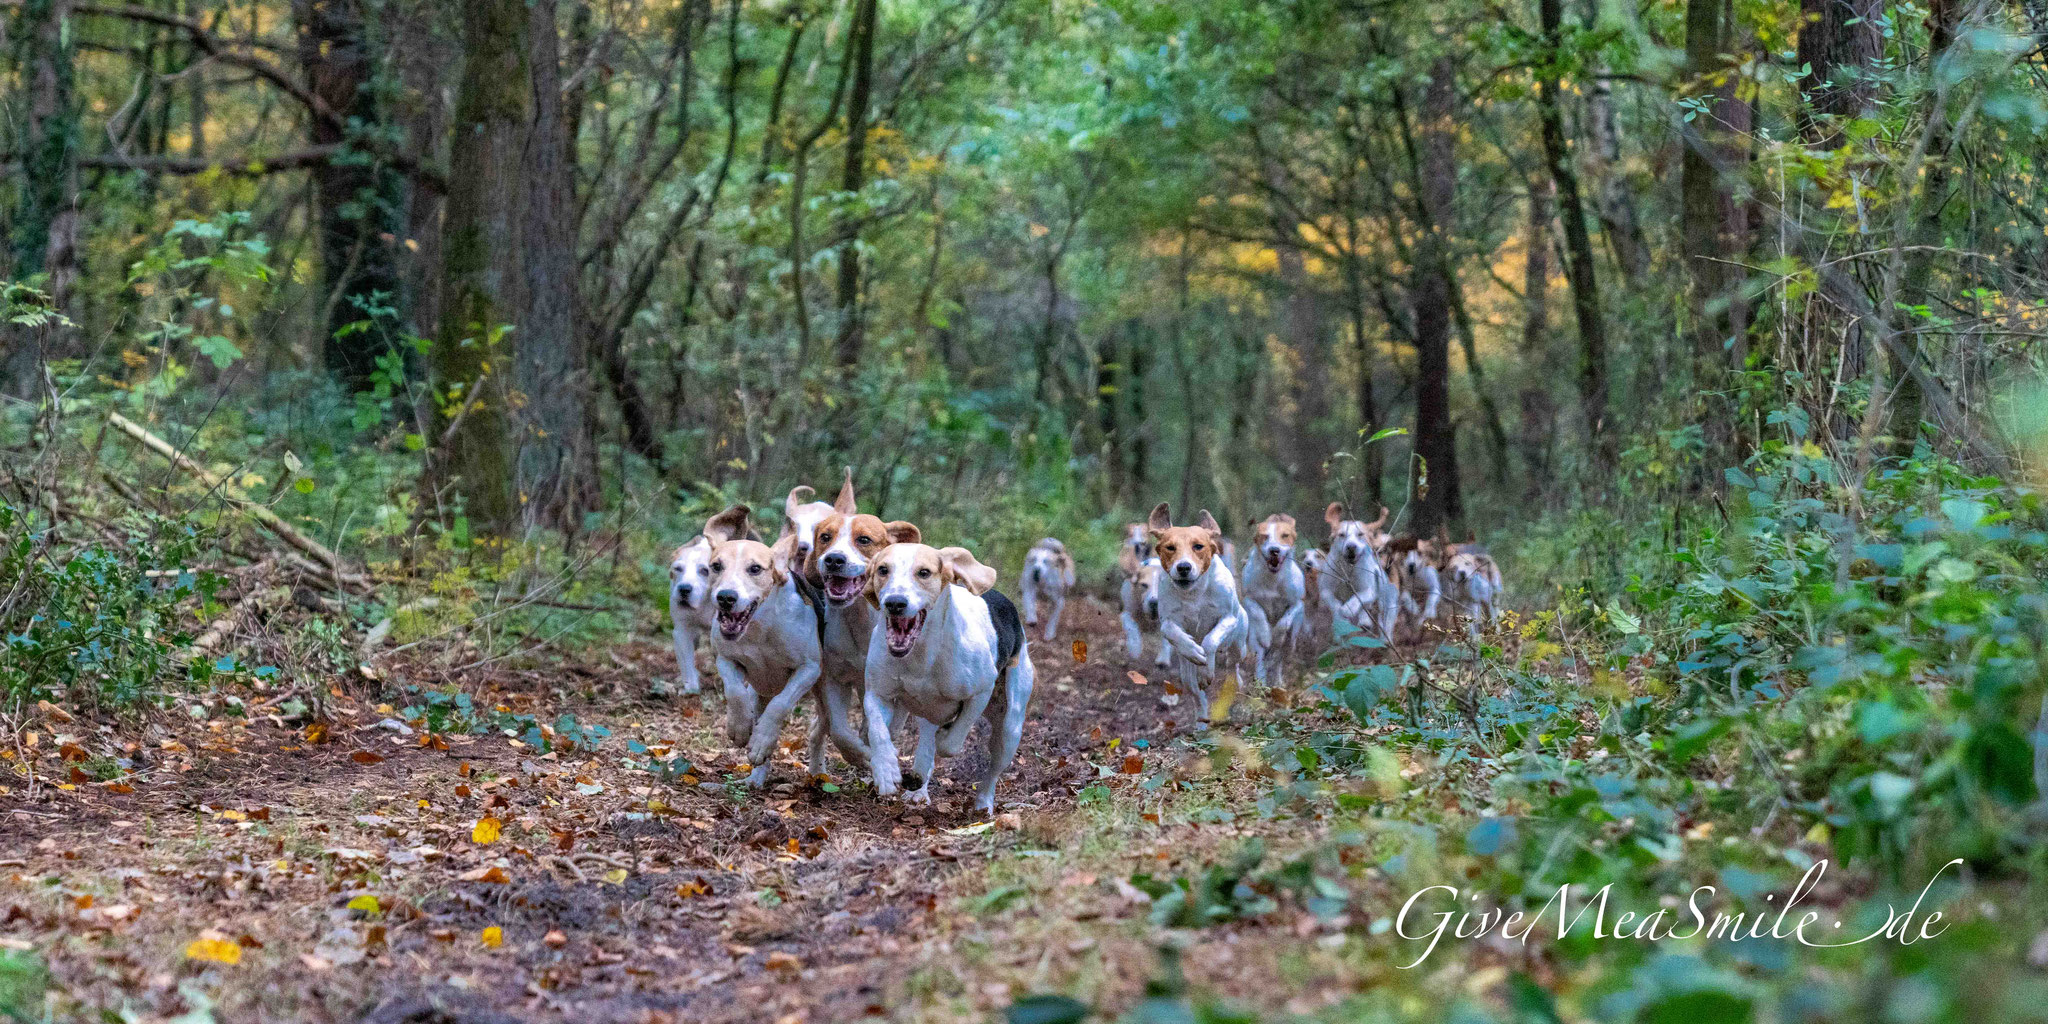 Jagdfotos vom Team @Givemeasmile.de auf der Fotojagd, Peter Jäger  #Eggermühlen #RuFEggermühlen #Beaglemeutemünsterland #givemeasmilede #foxhounds #beagles #jagdreiten #schleppjagd